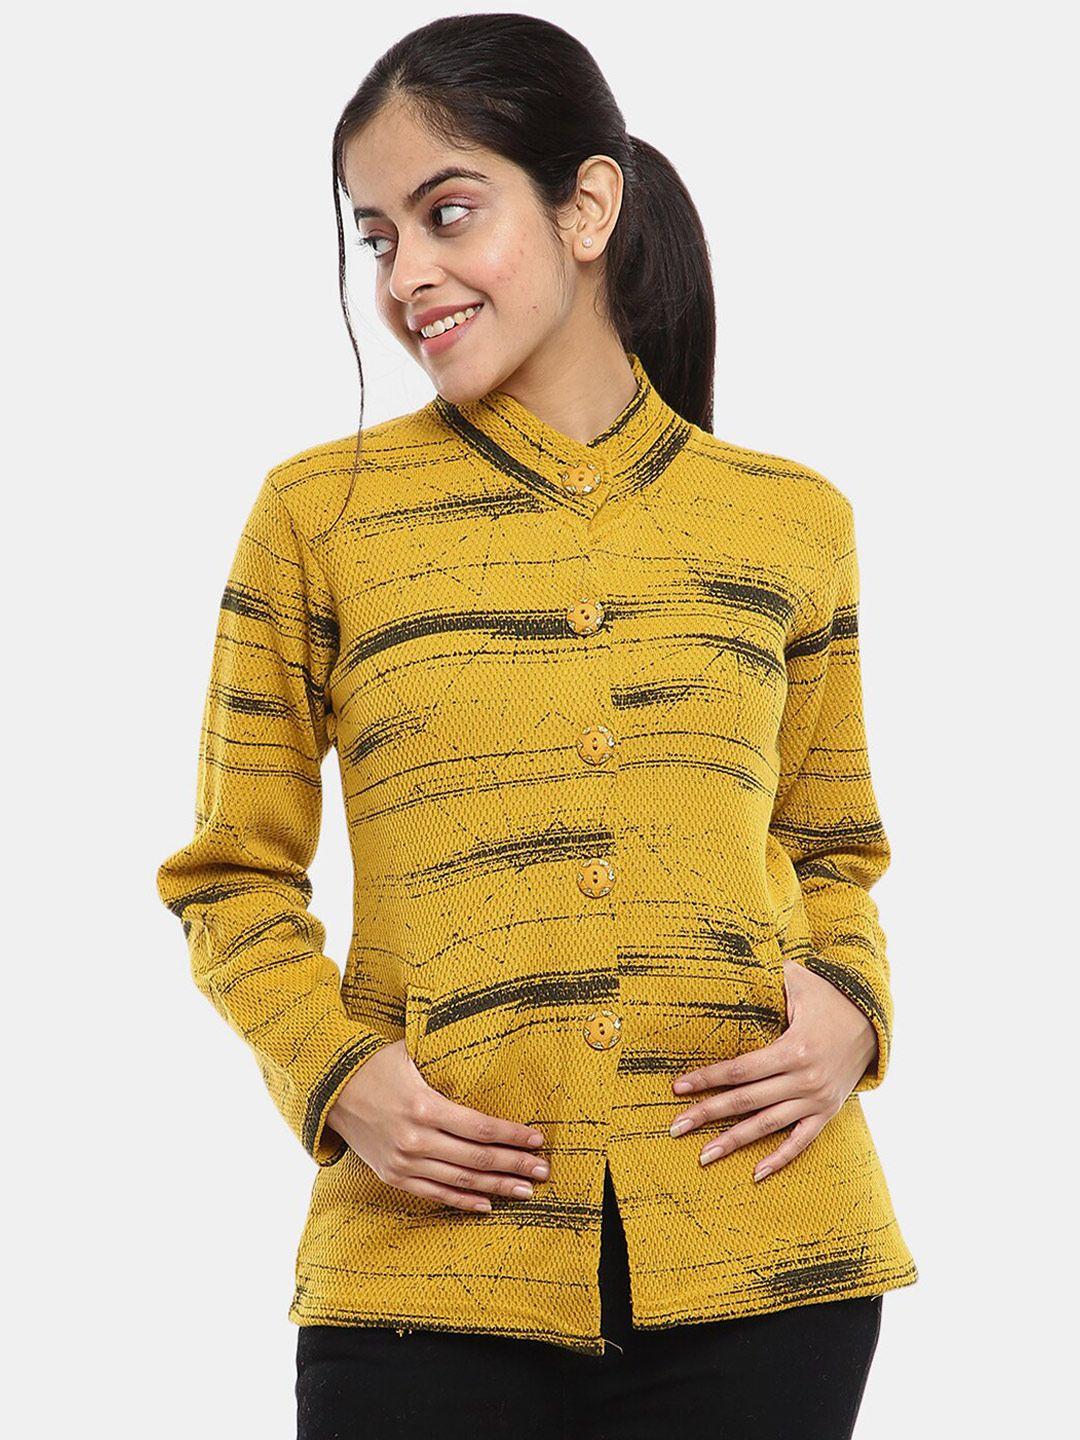 v-mart abstract printed mock collar acrylic cardigan sweater